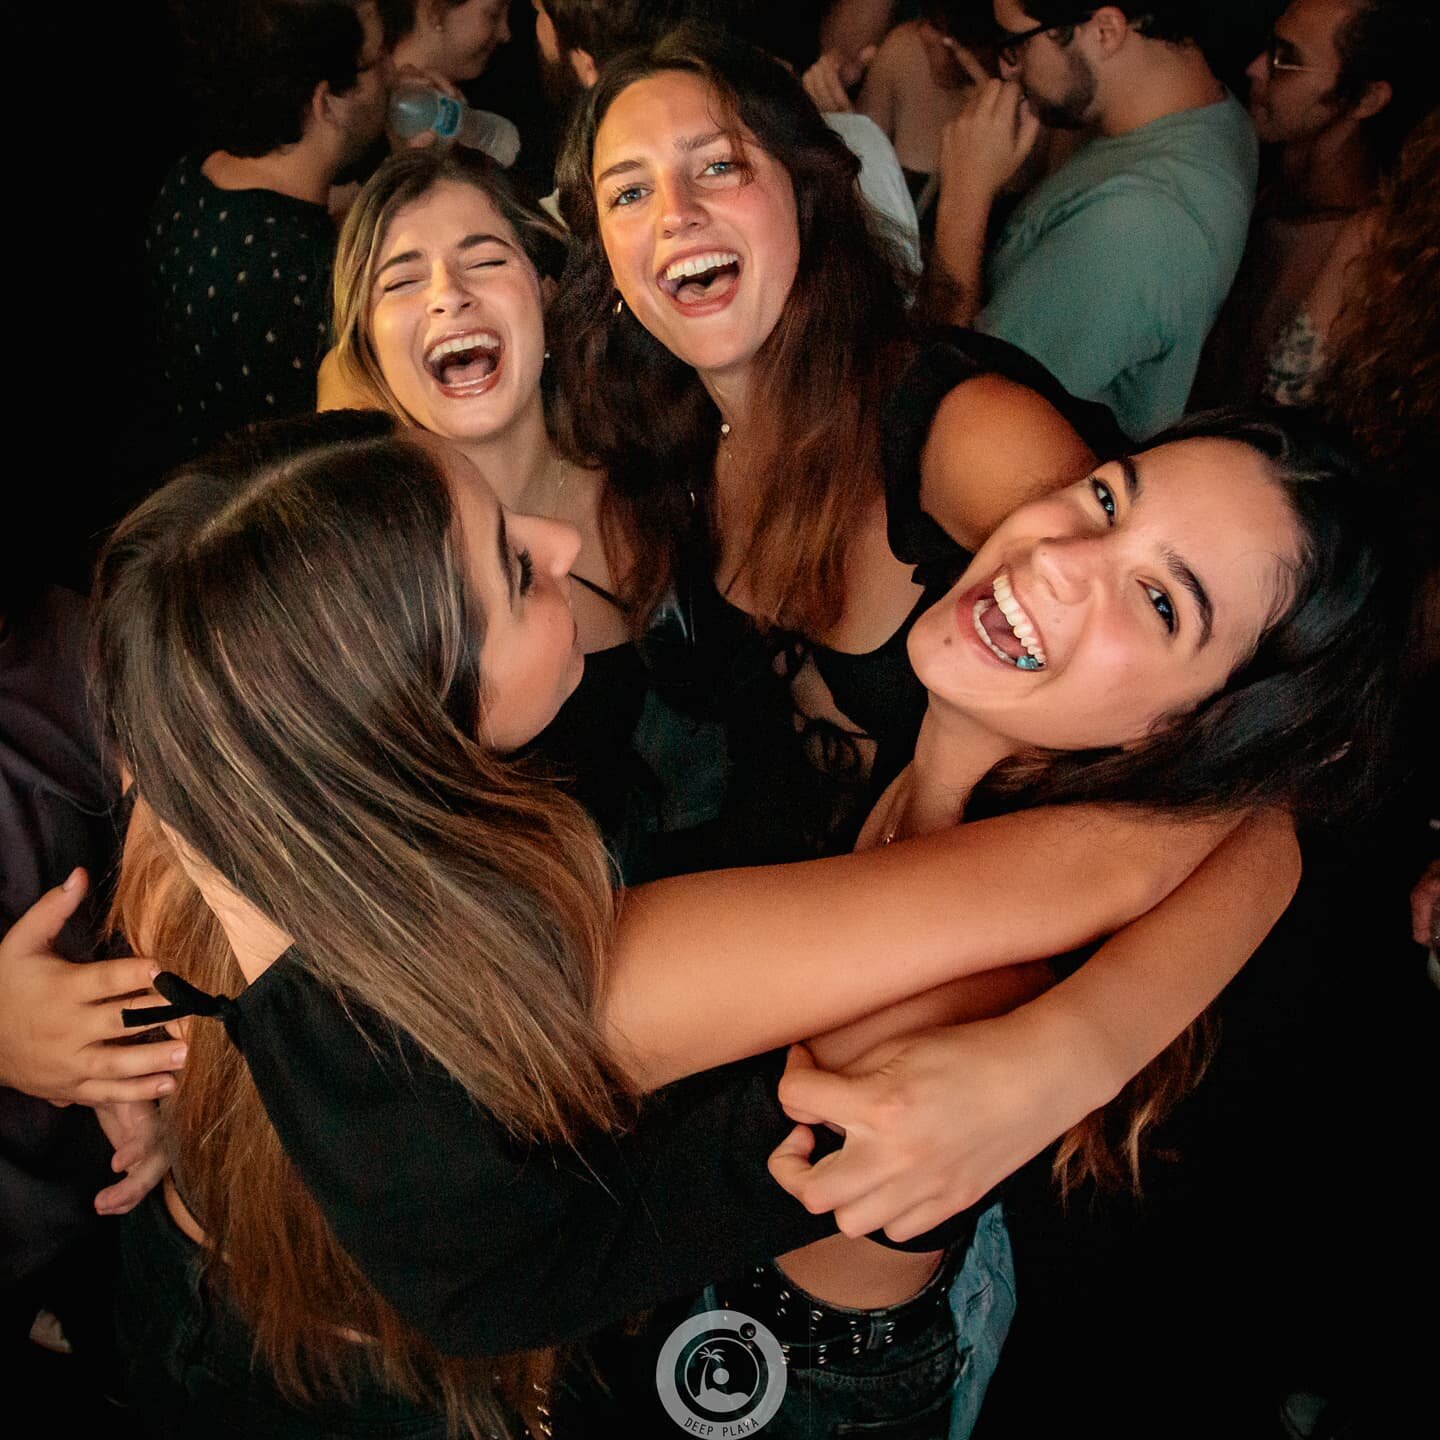 Finding your friends on the dancefloor 😍💃🚀

#playavibes #boleroball #atvrecords #melindasmiami #downtownmiami 

📸 @litovidaurre